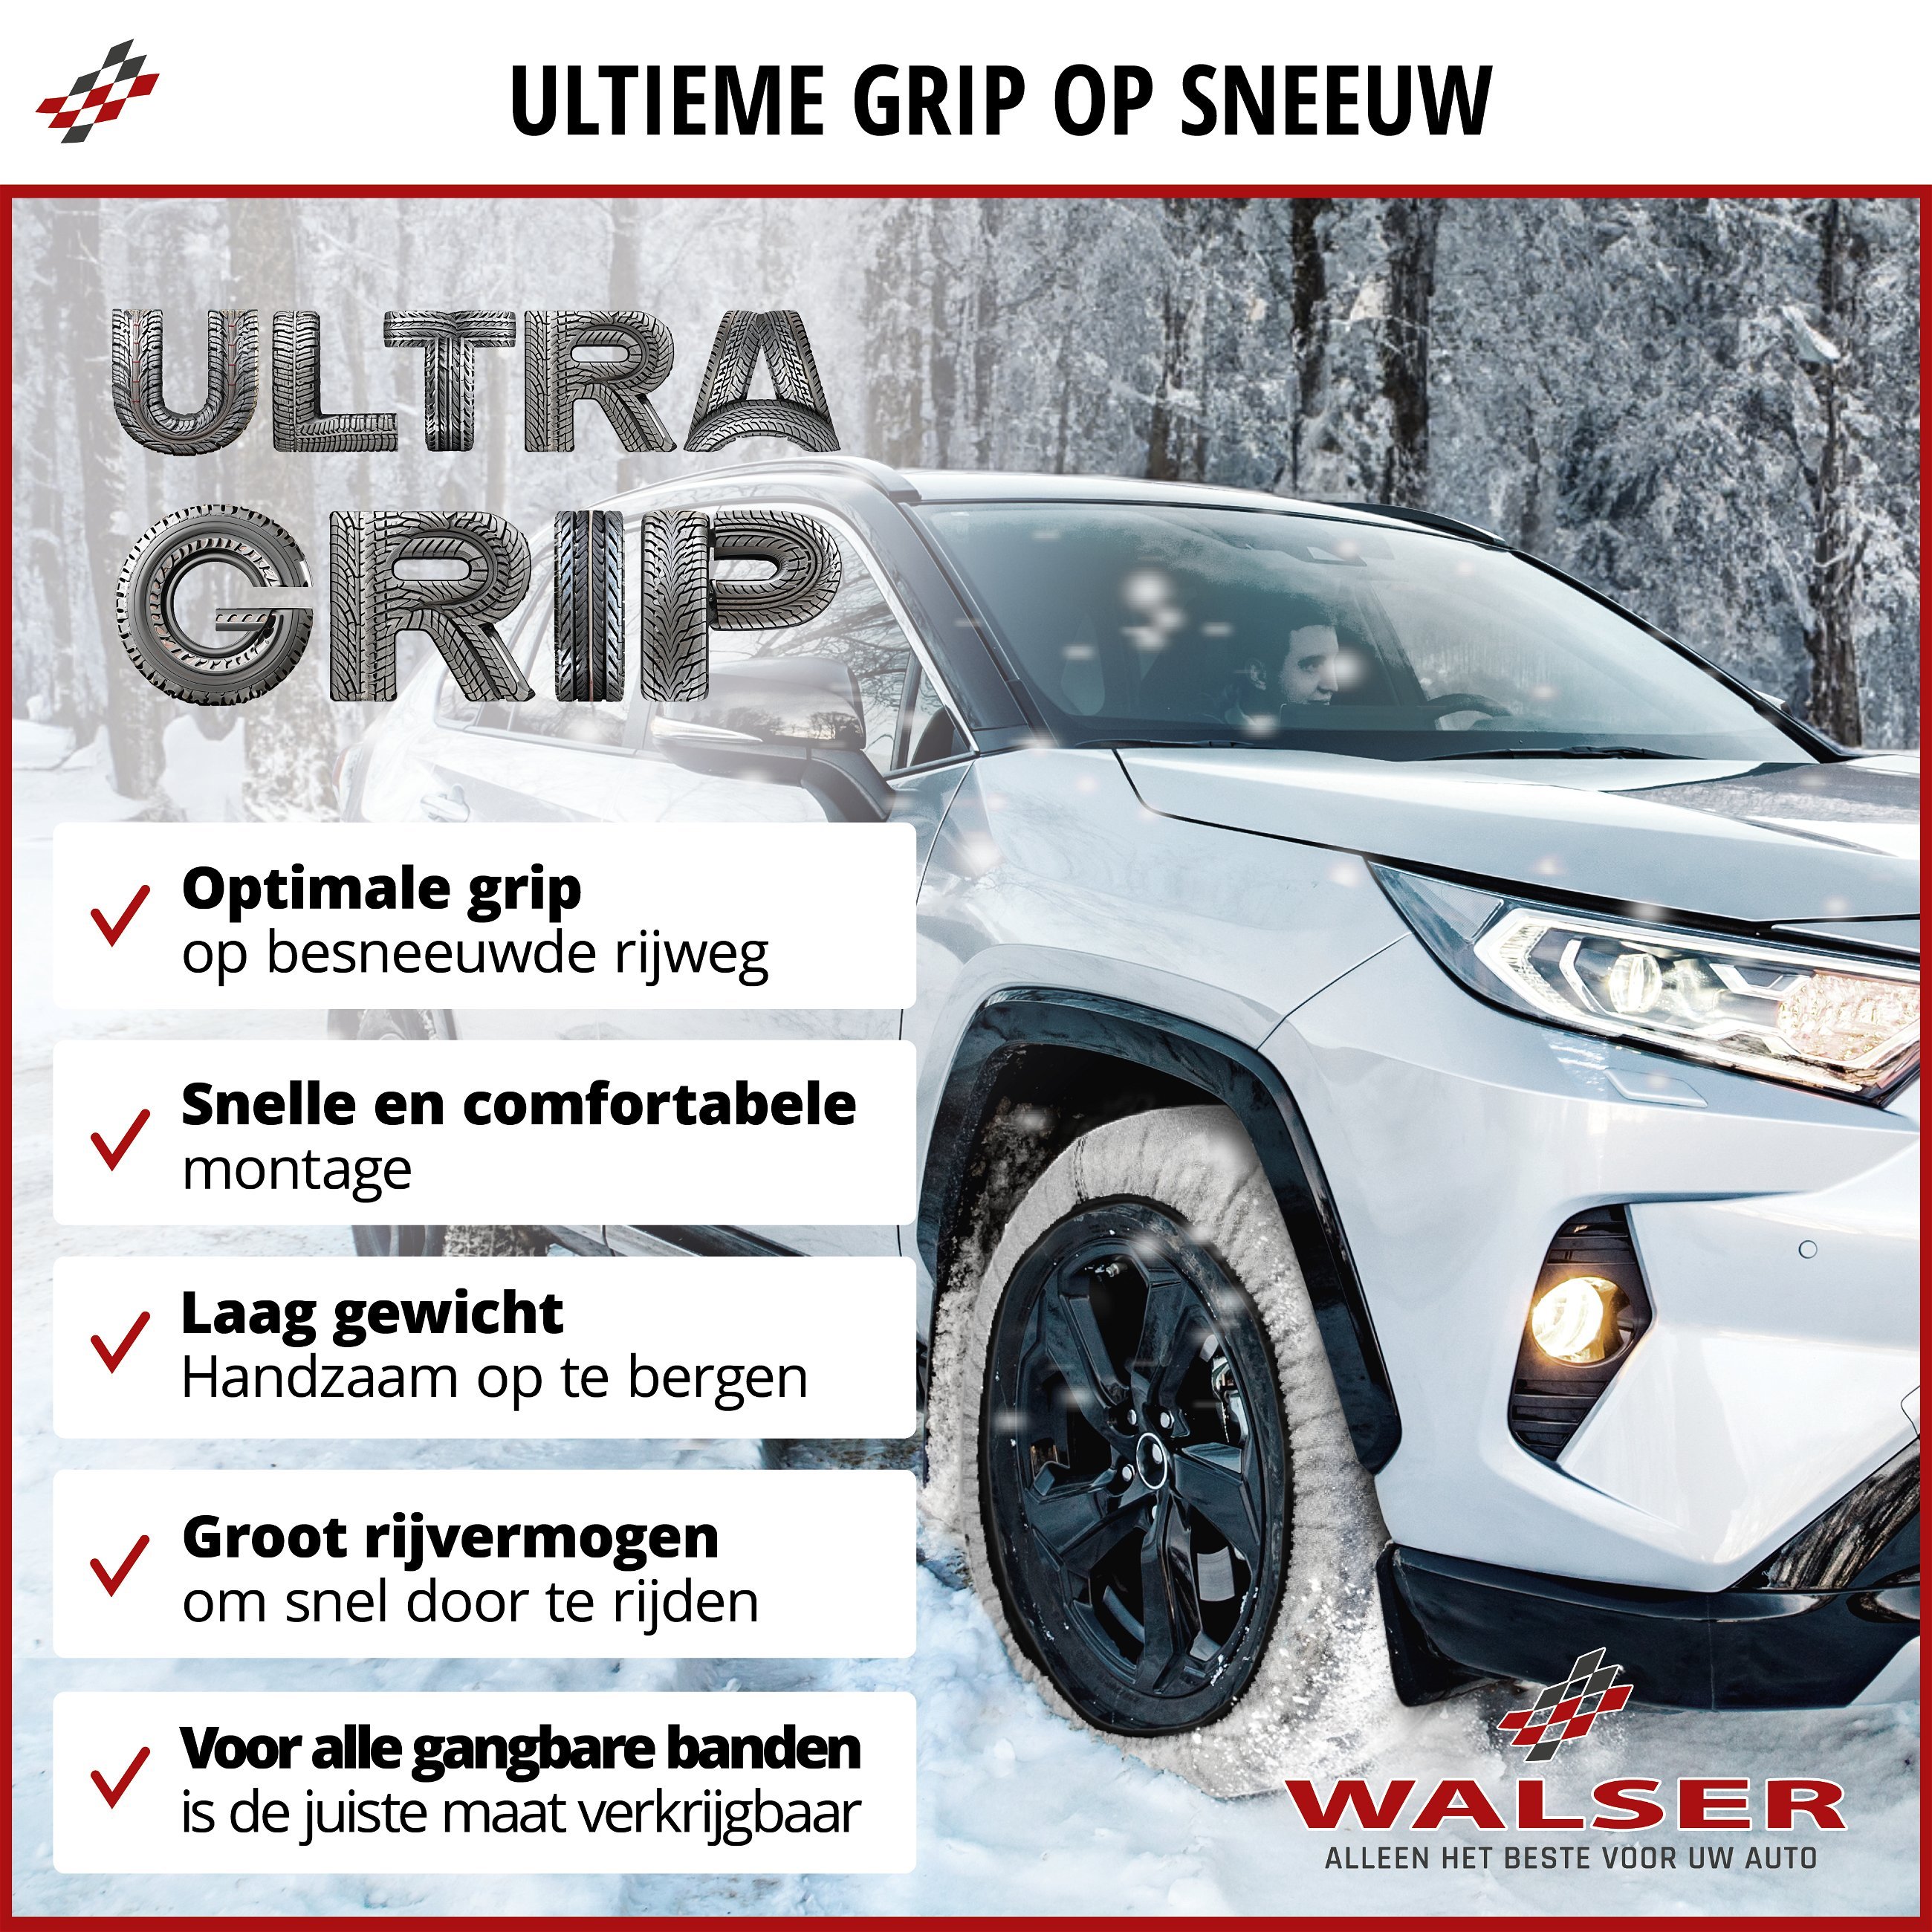 Premium Sneeuwkettingen Alternatief Ultra Grip S, Textiel Sneeuwkettingen, Sneeuwkousen Set van 2 wit